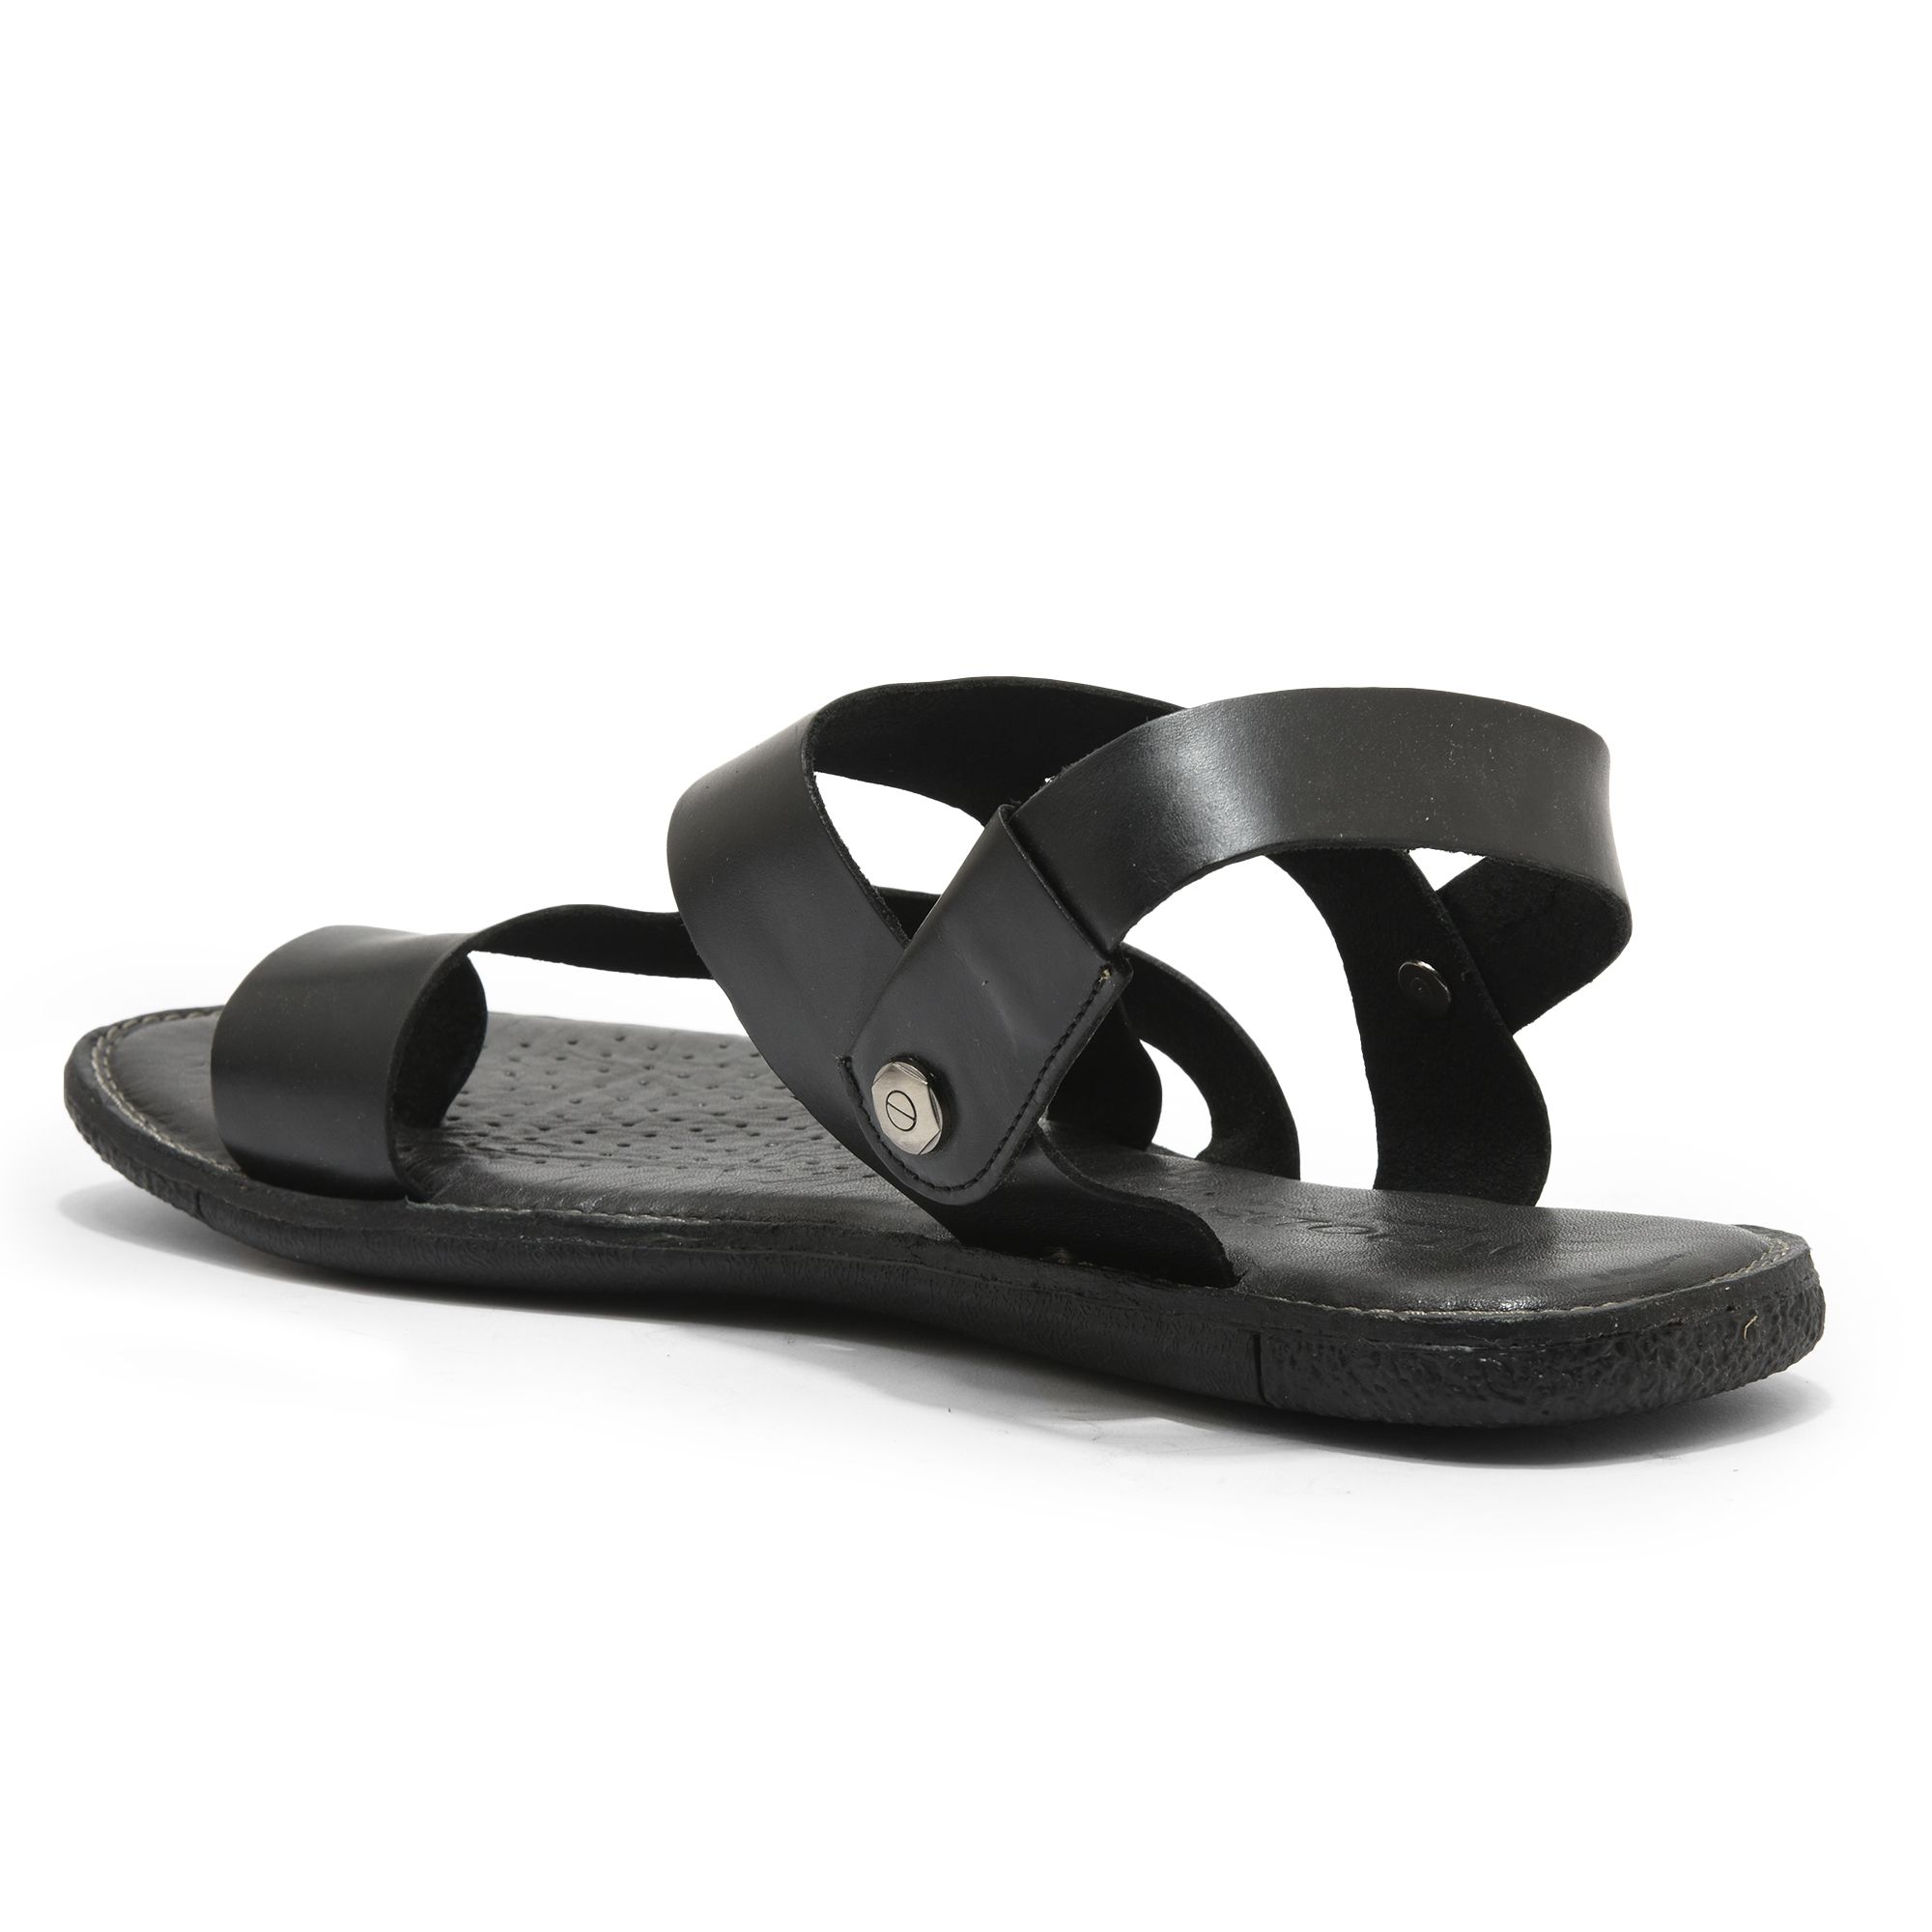 Black leather sandal for men